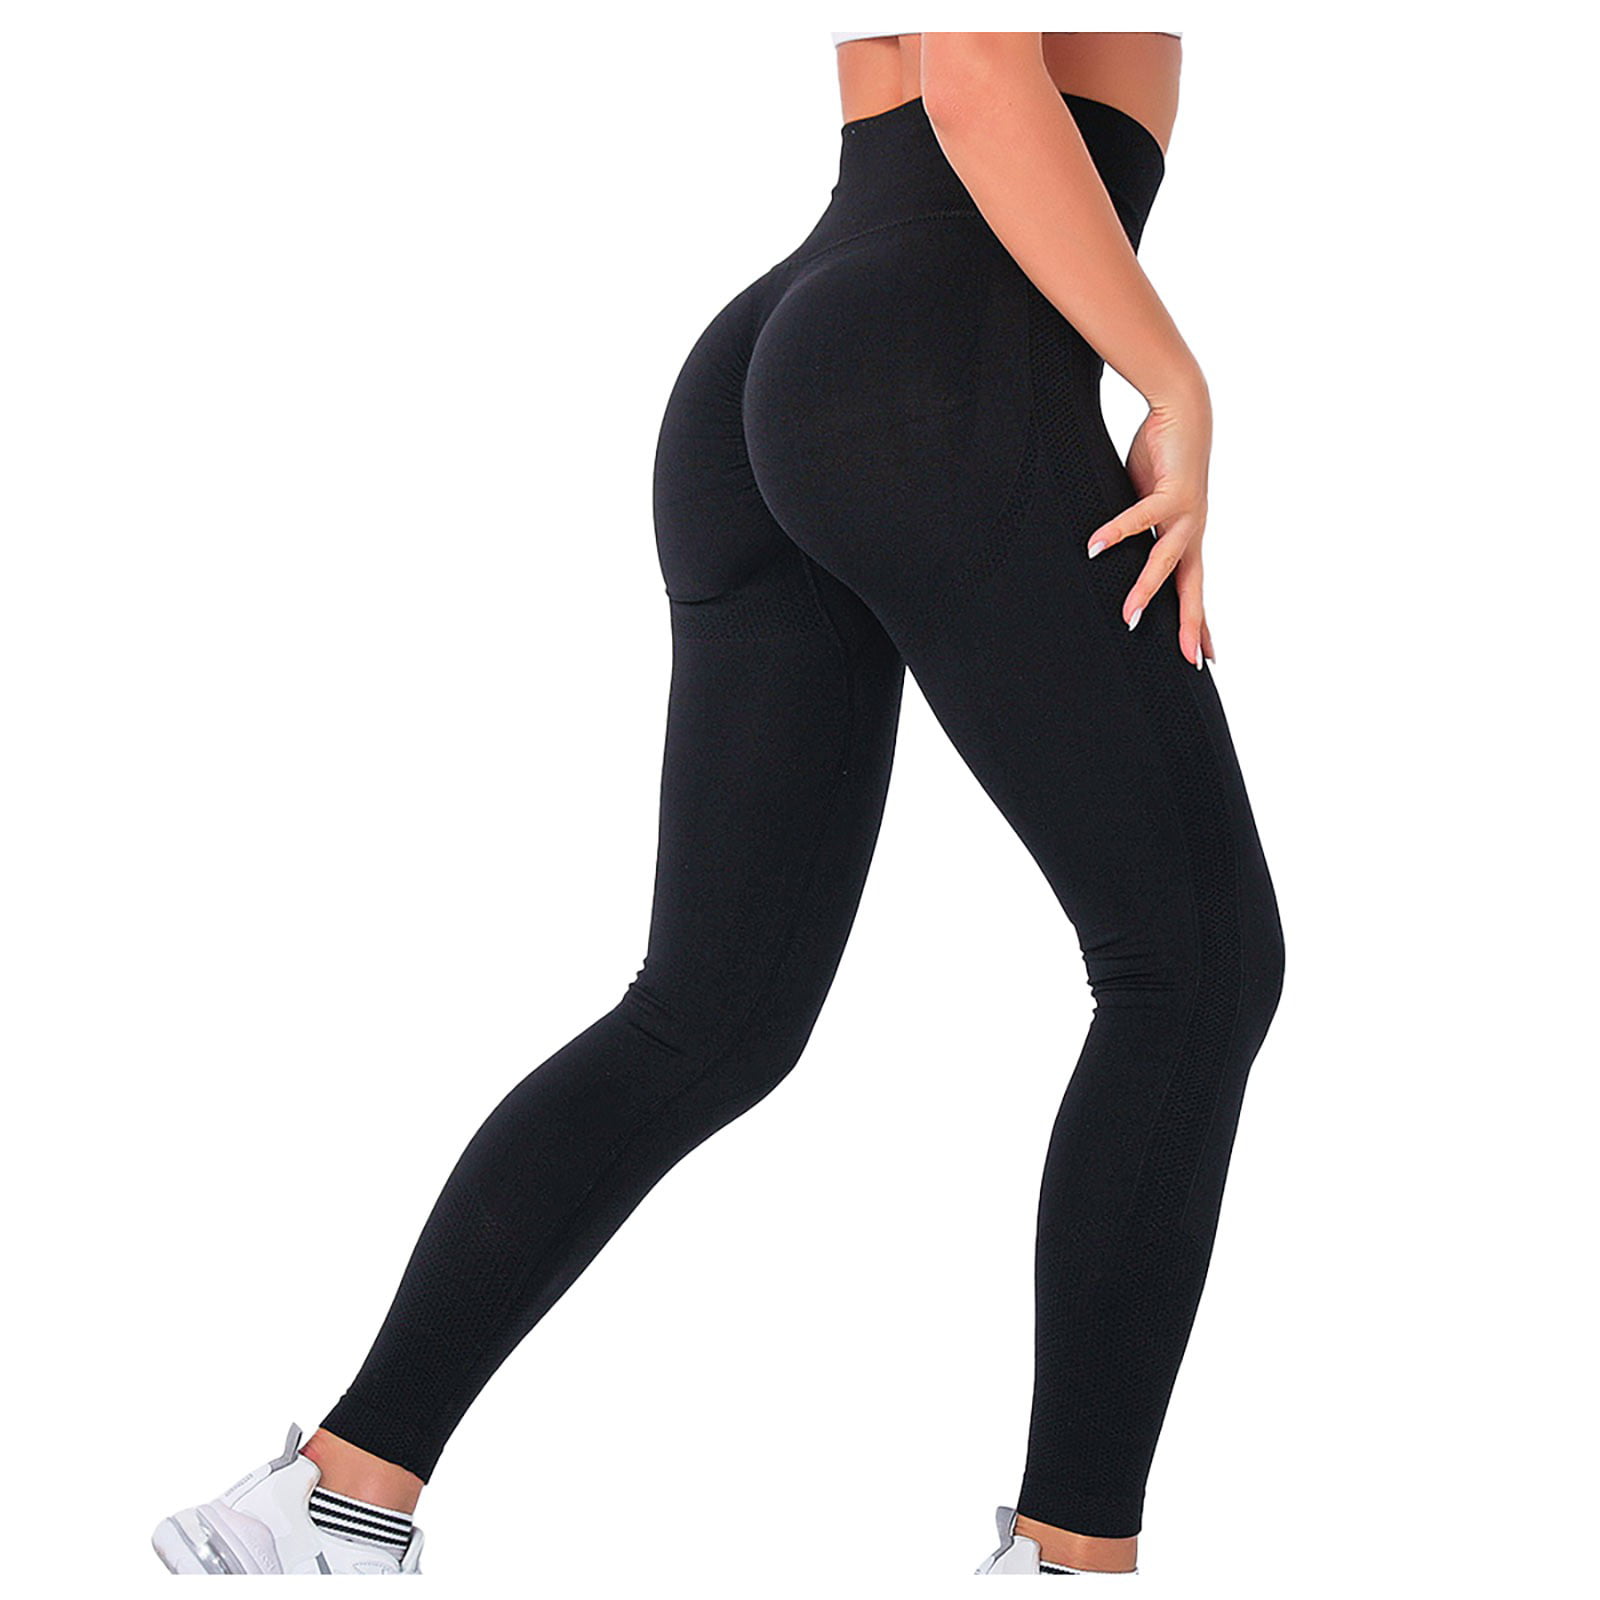 2 x JML Hollywood Pants, Shapewear Leggings for Women, Double-Layer  Waistband, Flattens Tummy & Slims Waist, Soft Stretchy Yoga Tights, Black